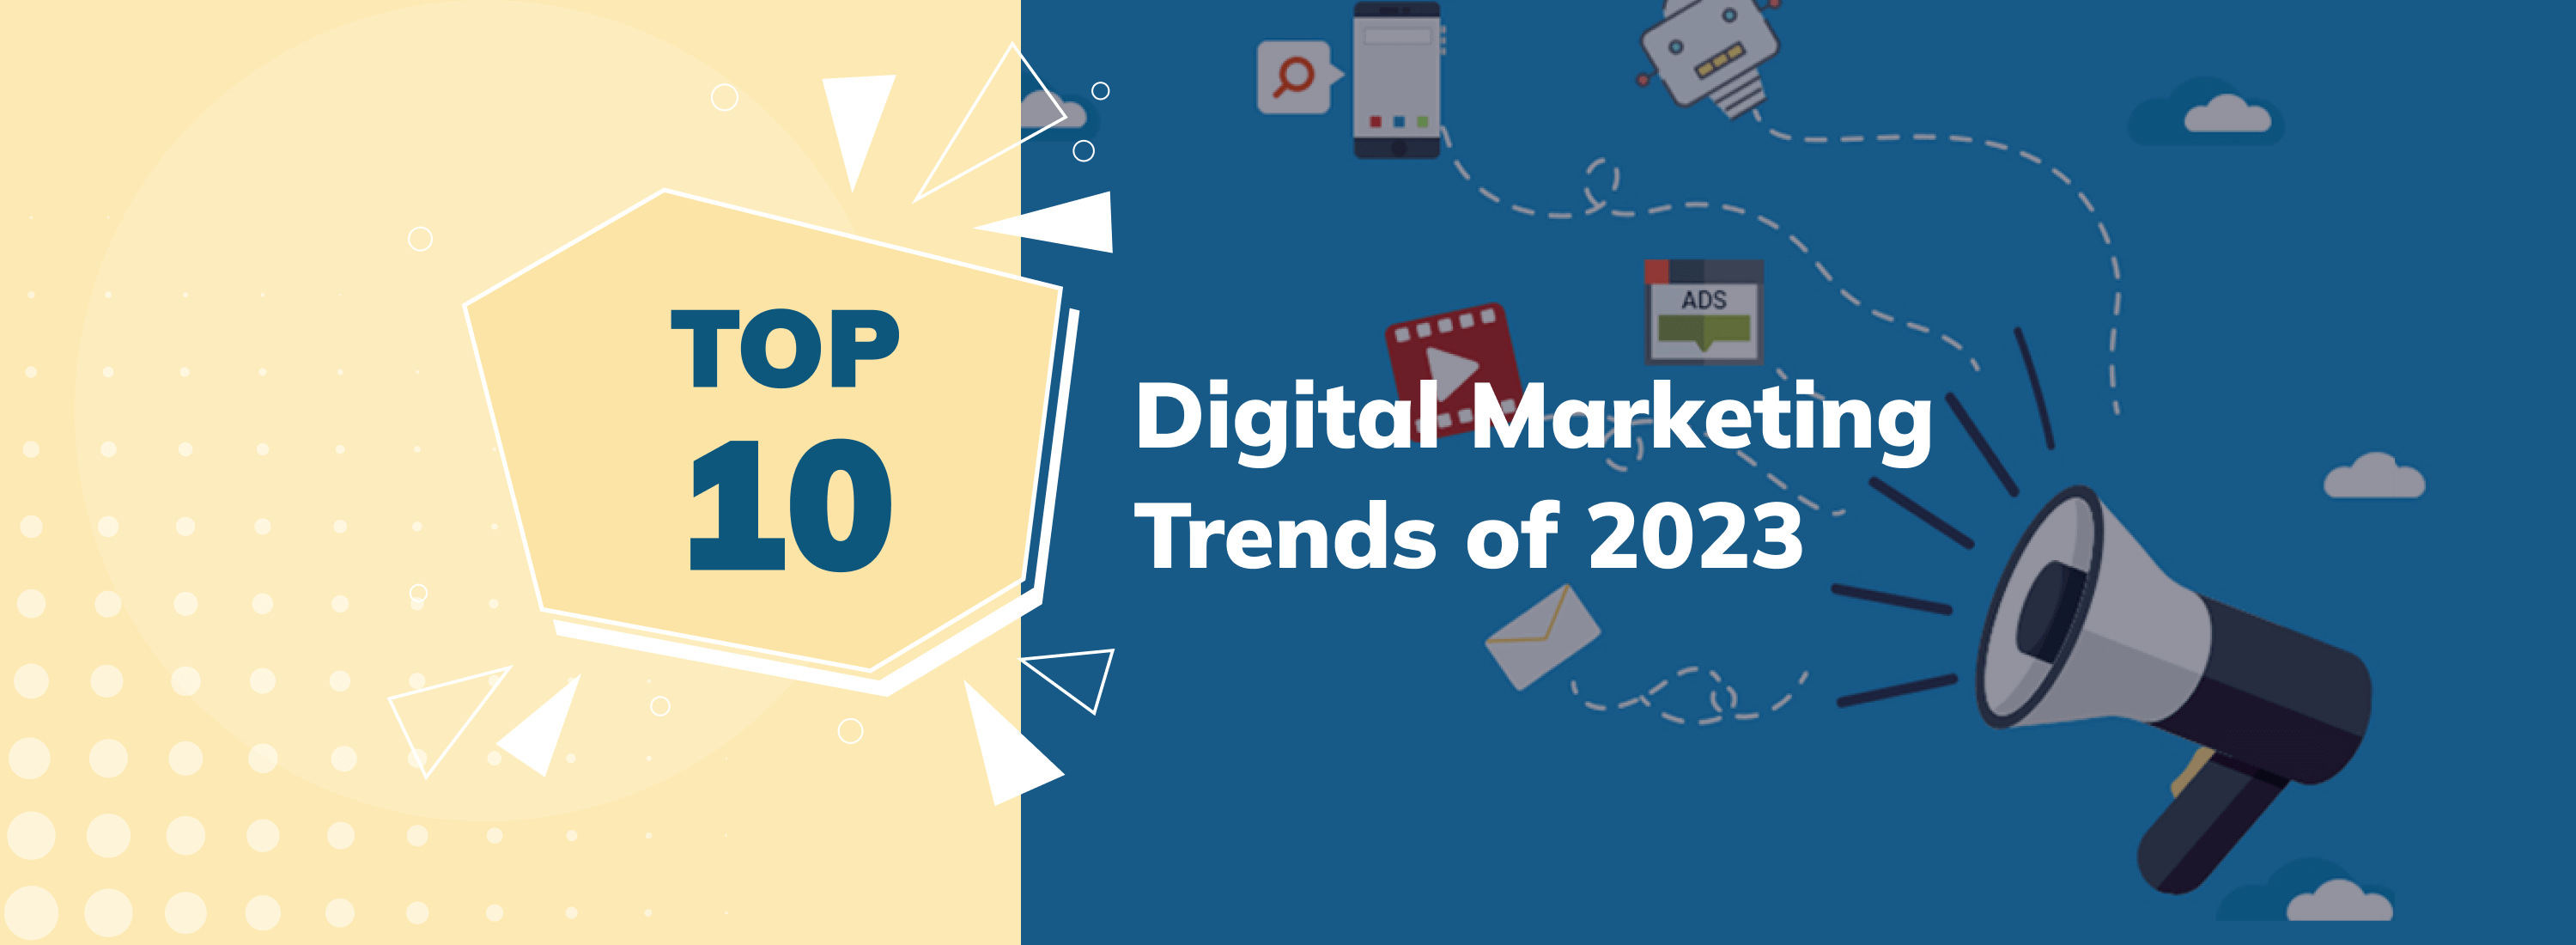 Digital markketing trends